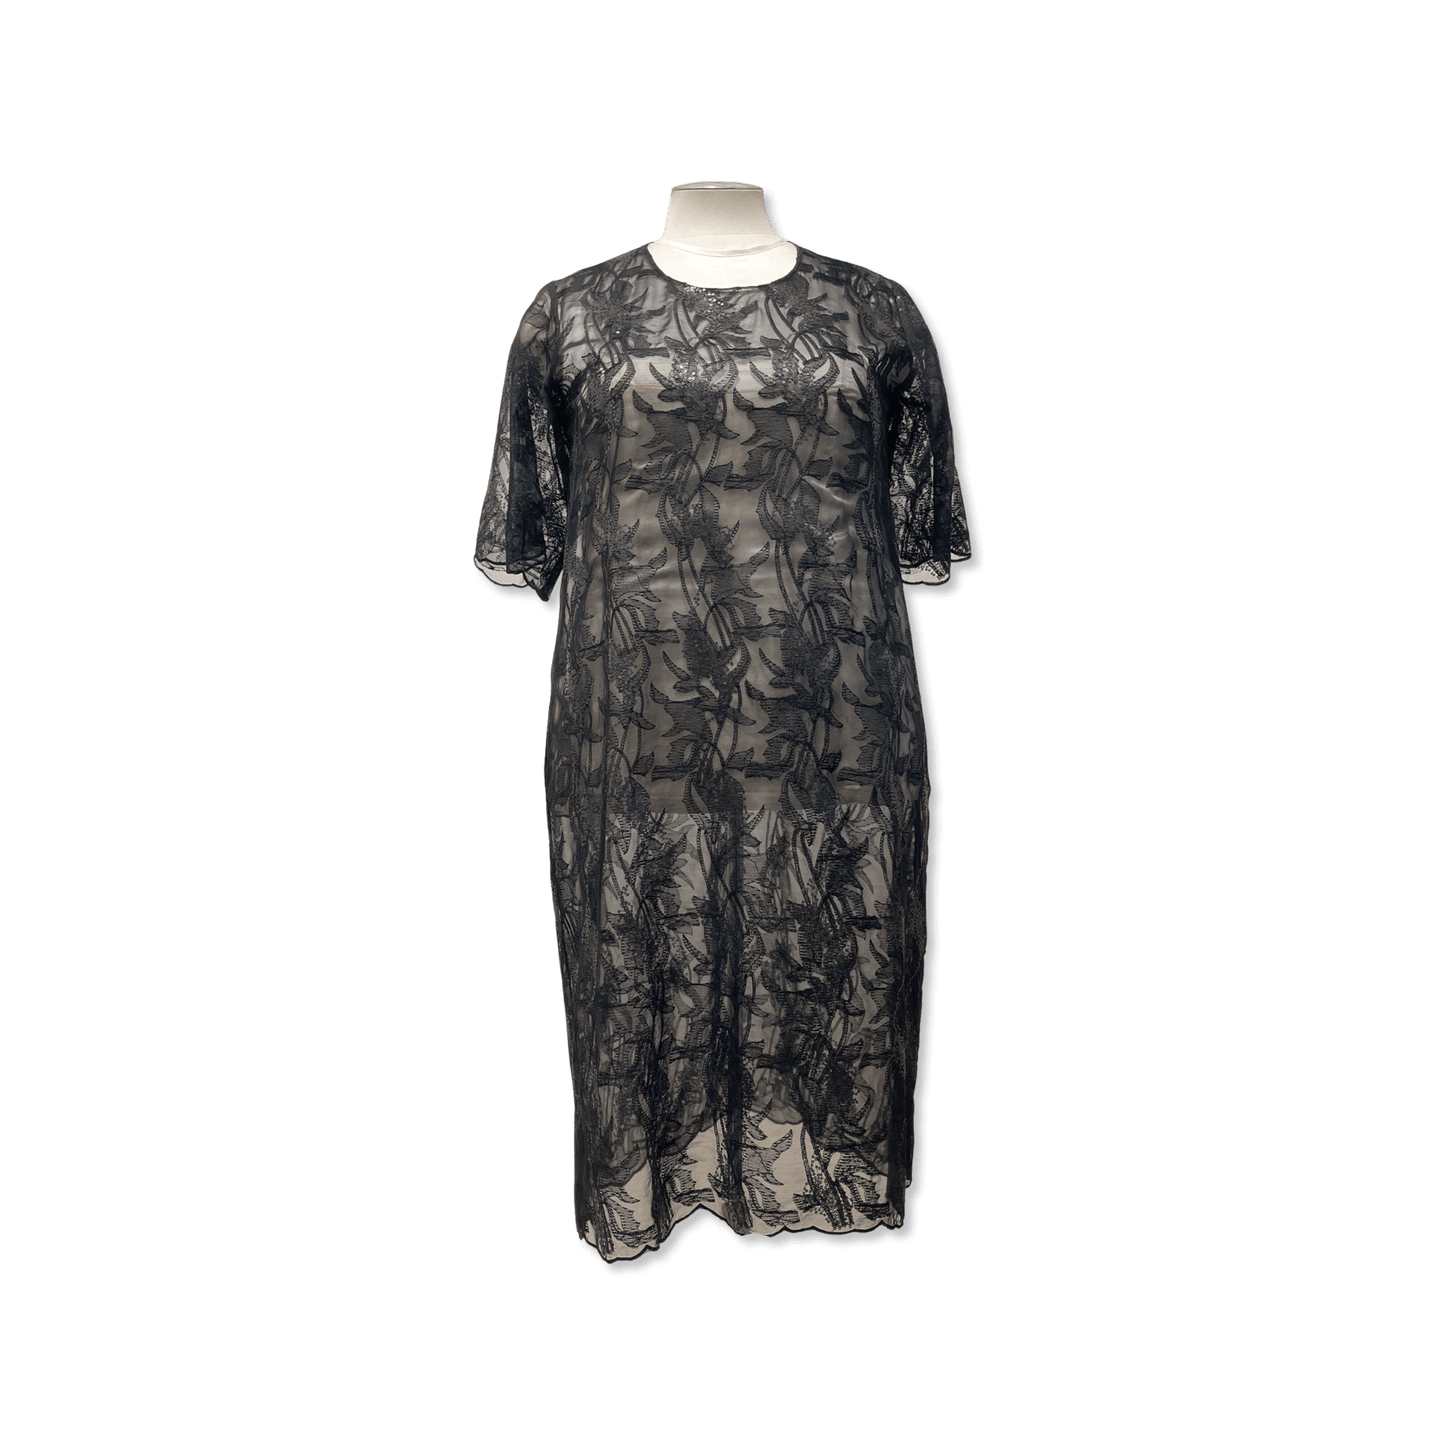 Bloom Clothing NZ,PERFECT CLASSIC DRESS,$279.00,